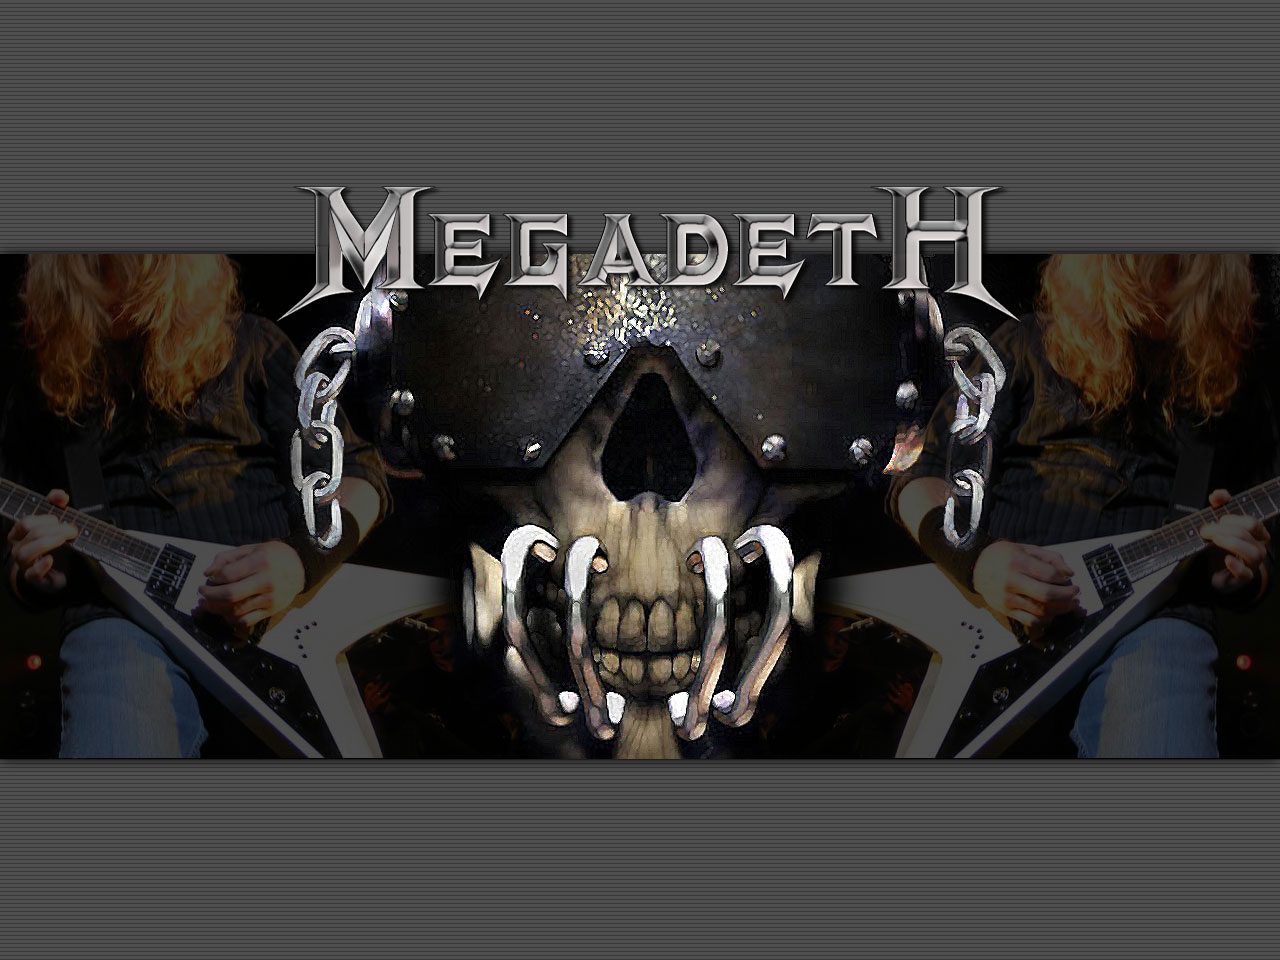 Megadeth Wallpaper Background Pictures 50jpg